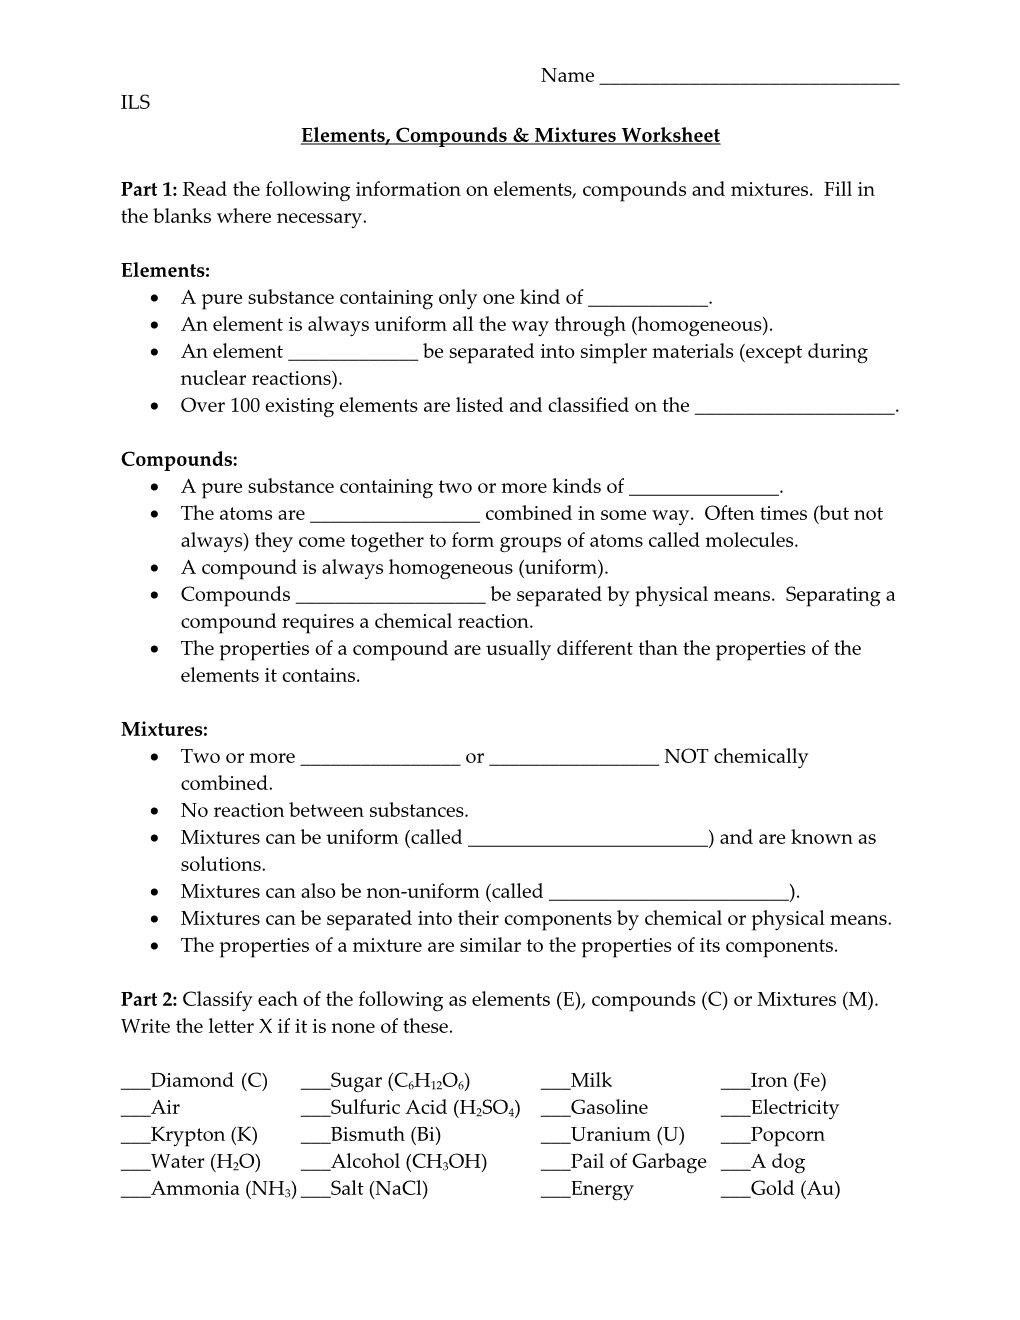 Elements, Compounds & Mixtures Worksheet